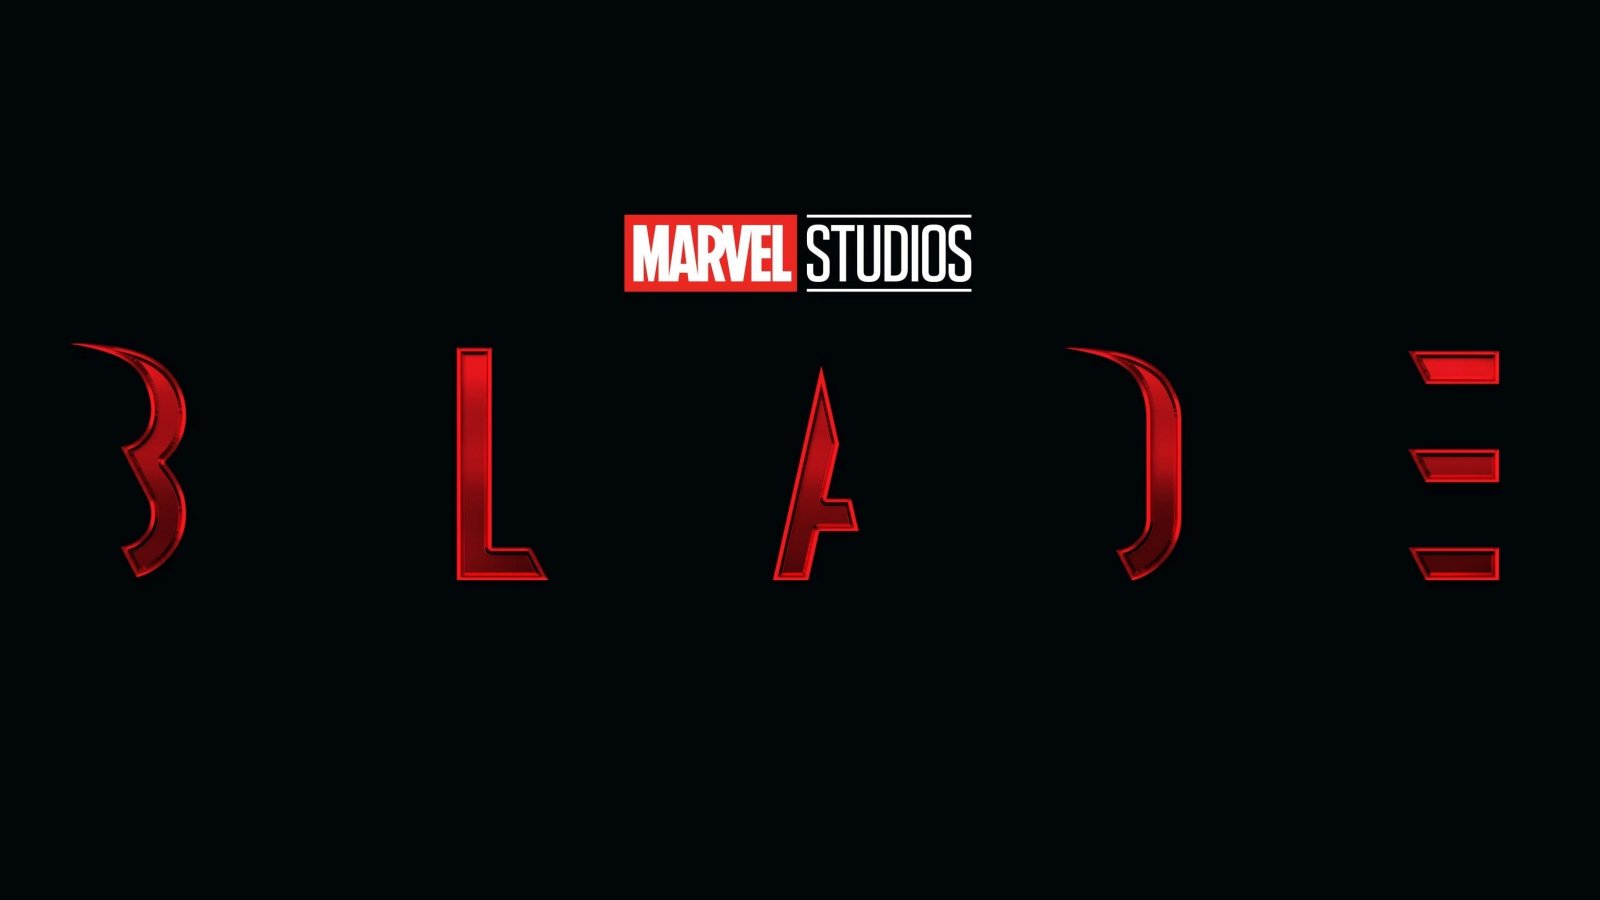 Blade sarà il secondo film Marvel vietato ai minori dopo Deadpool 3